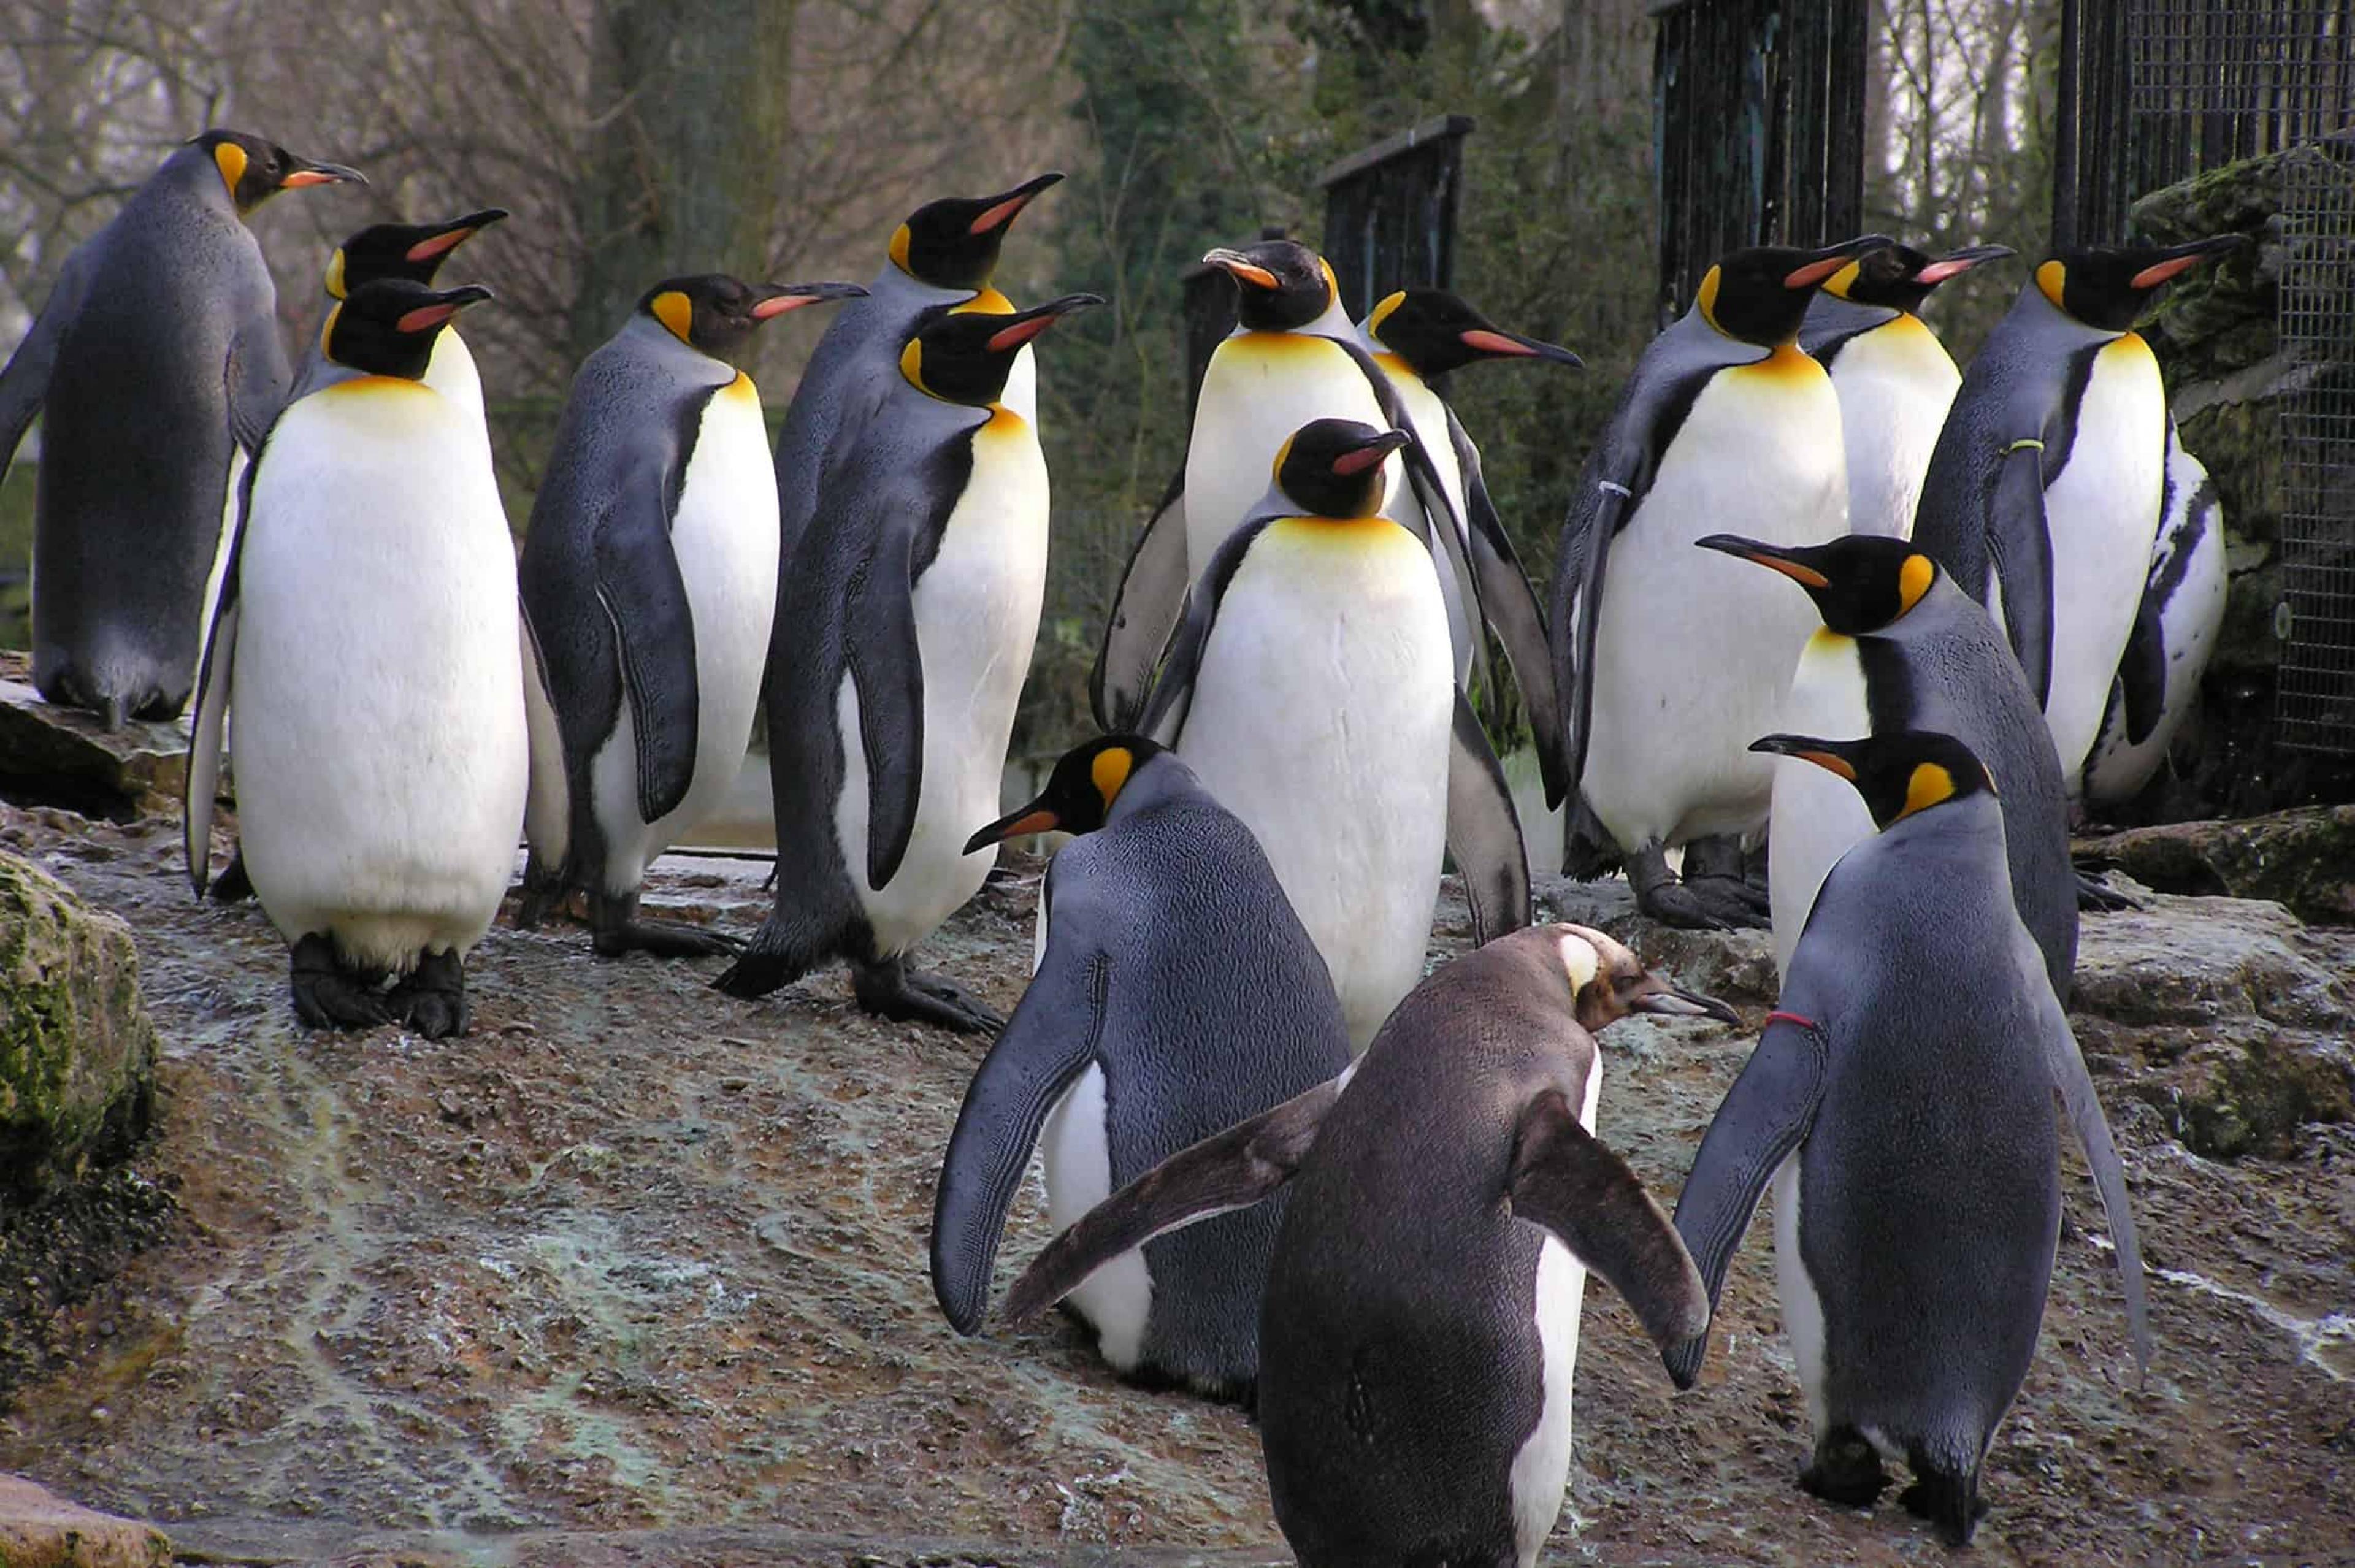 Penguins At Birdland Park and Gradens,Cotswolds, England - Courtesy of Birdland